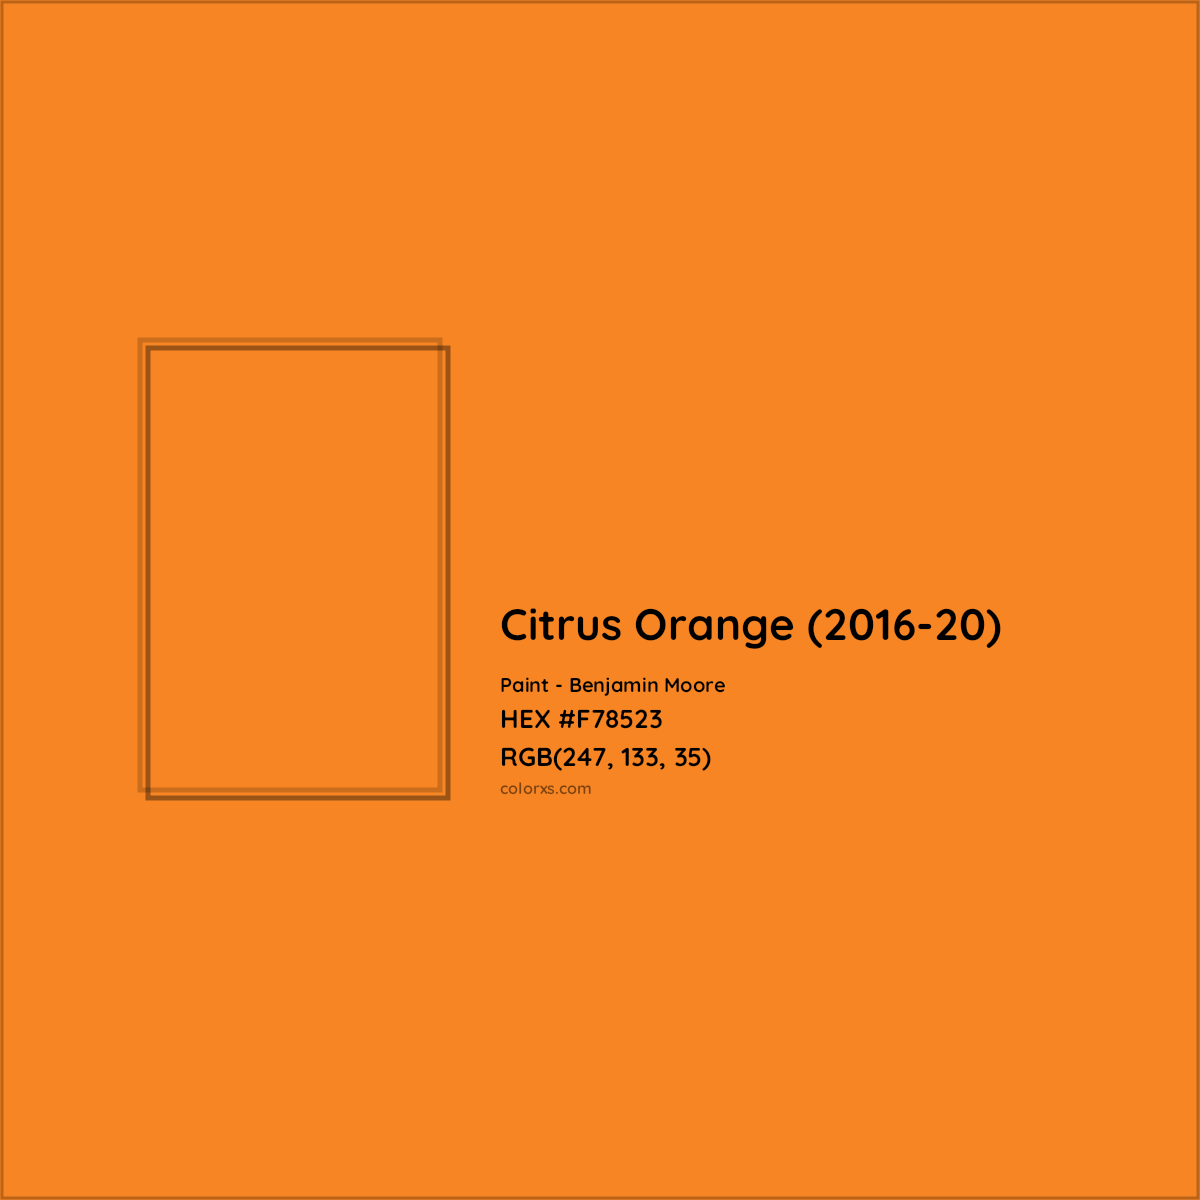 HEX #F78523 Citrus Orange (2016-20) Paint Benjamin Moore - Color Code